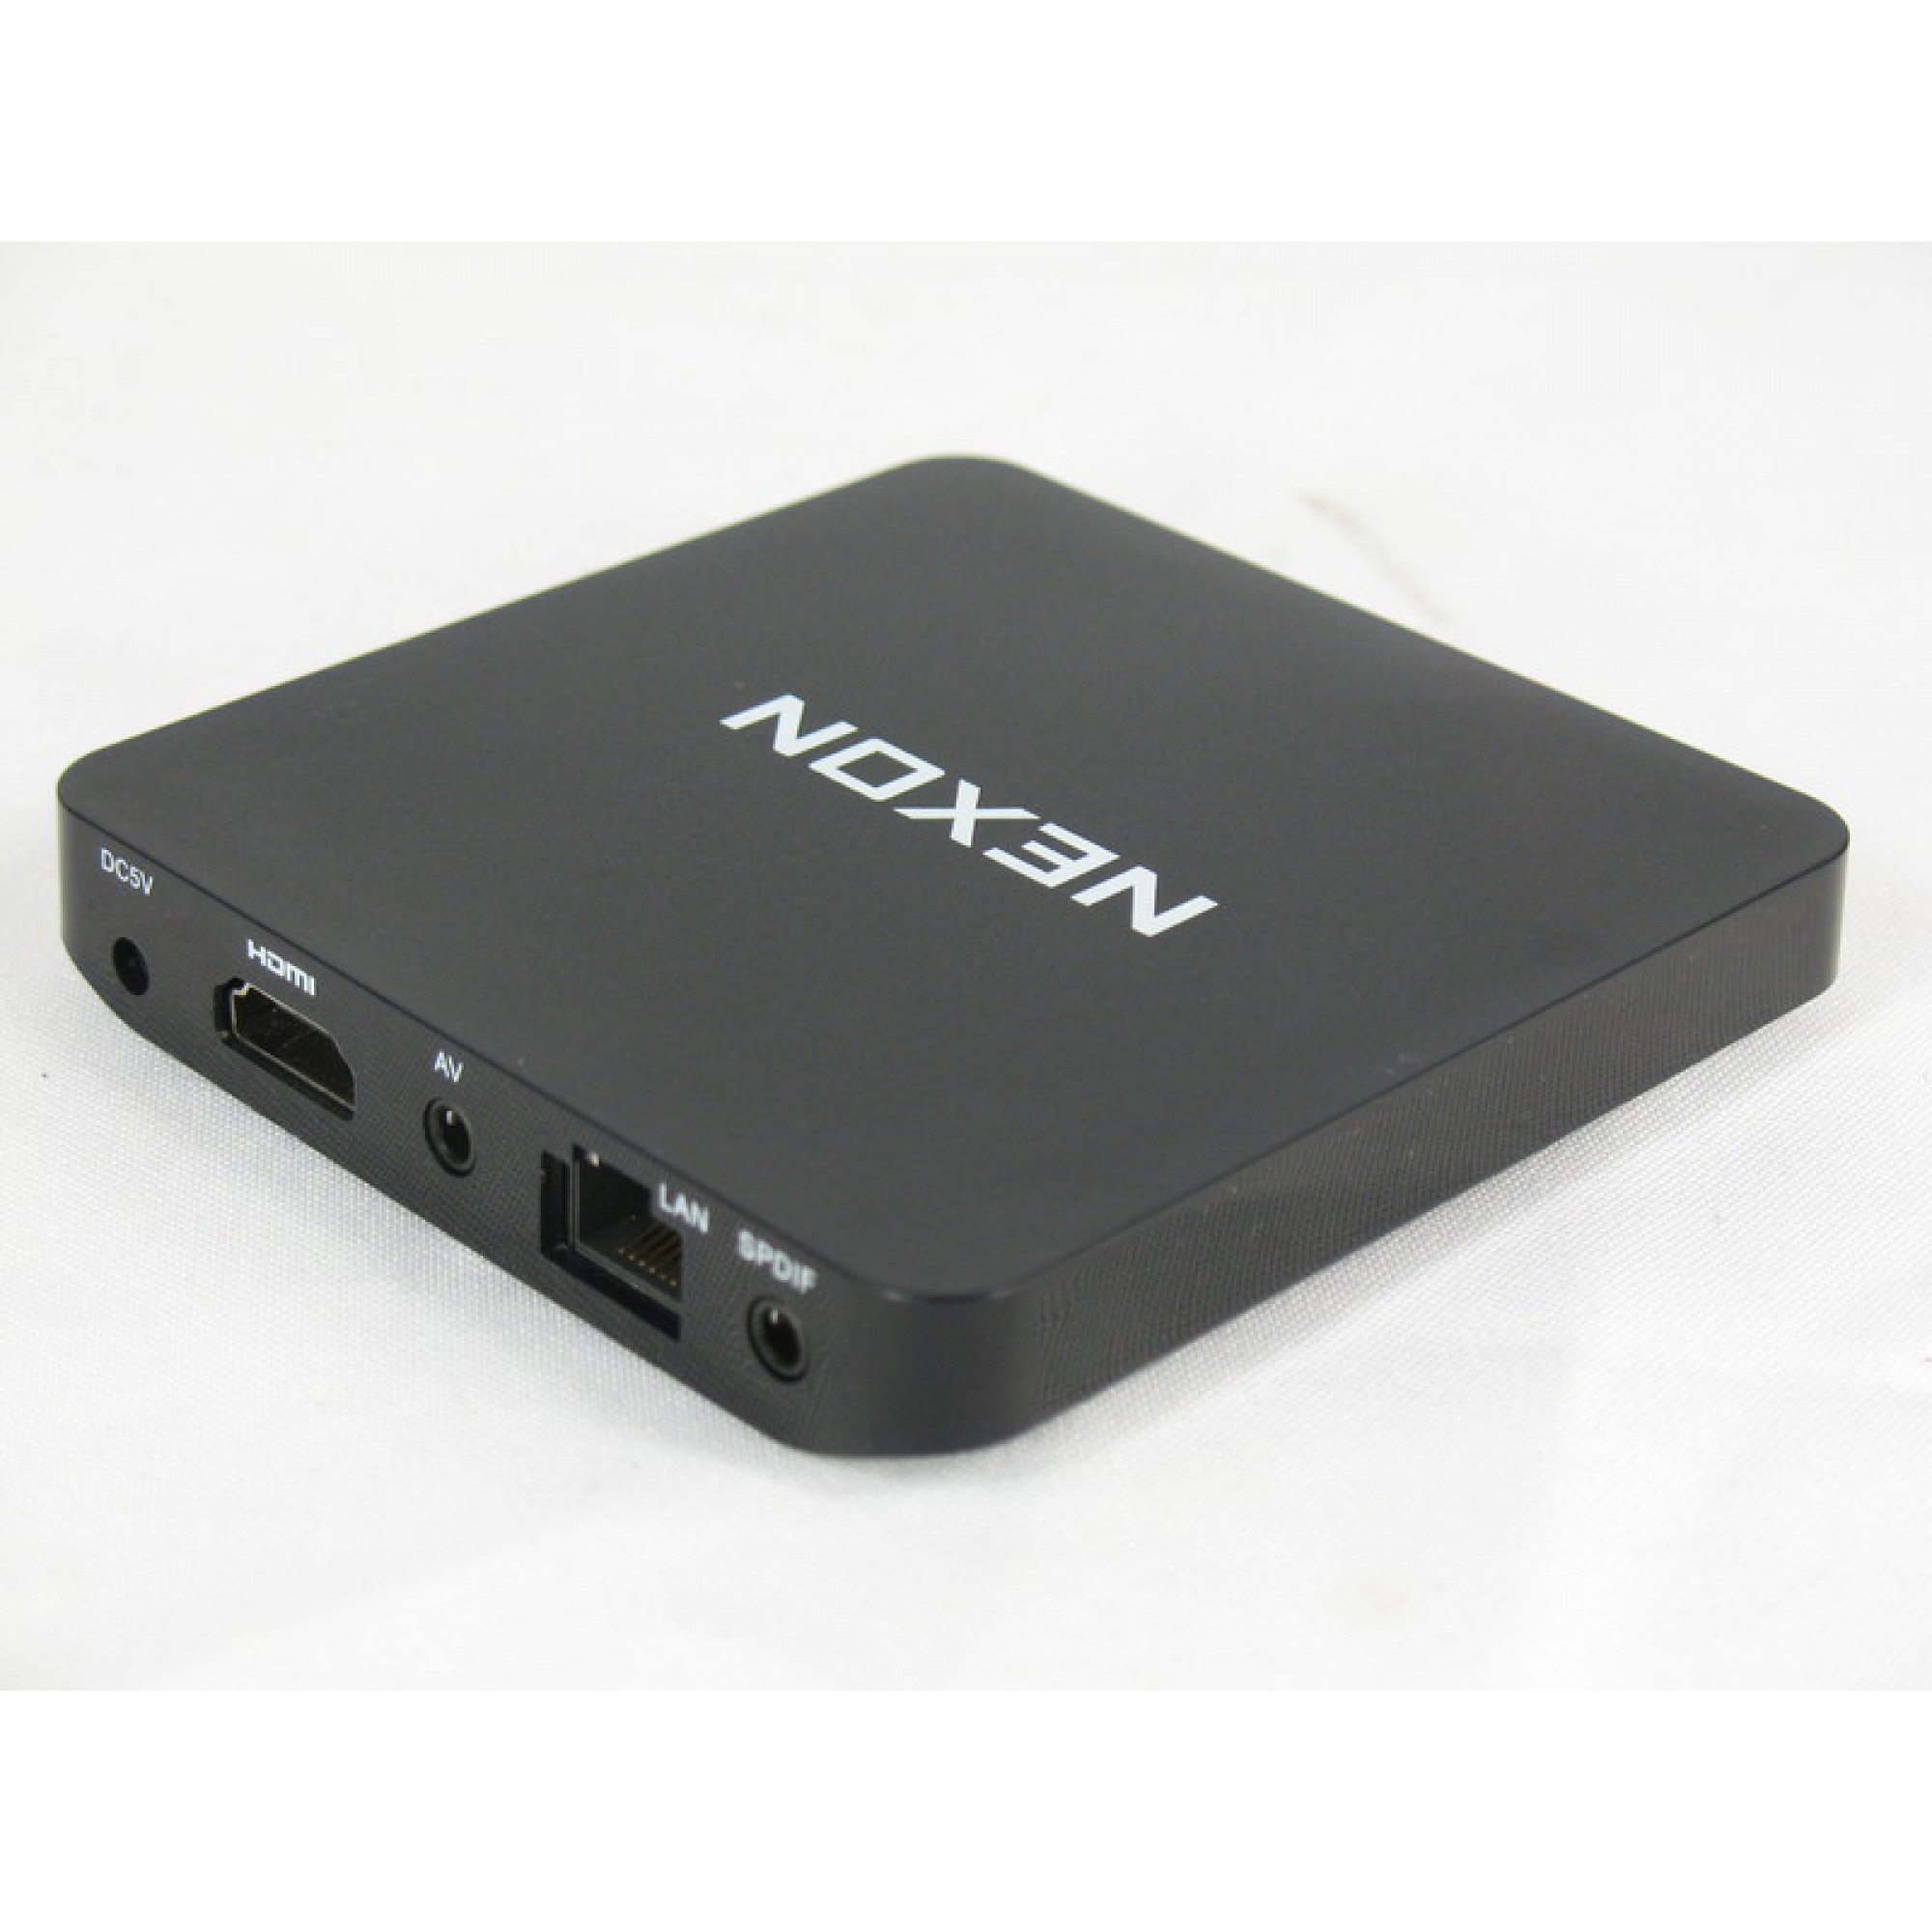 ТВ-приставка Nexon X1 4/2G/16G